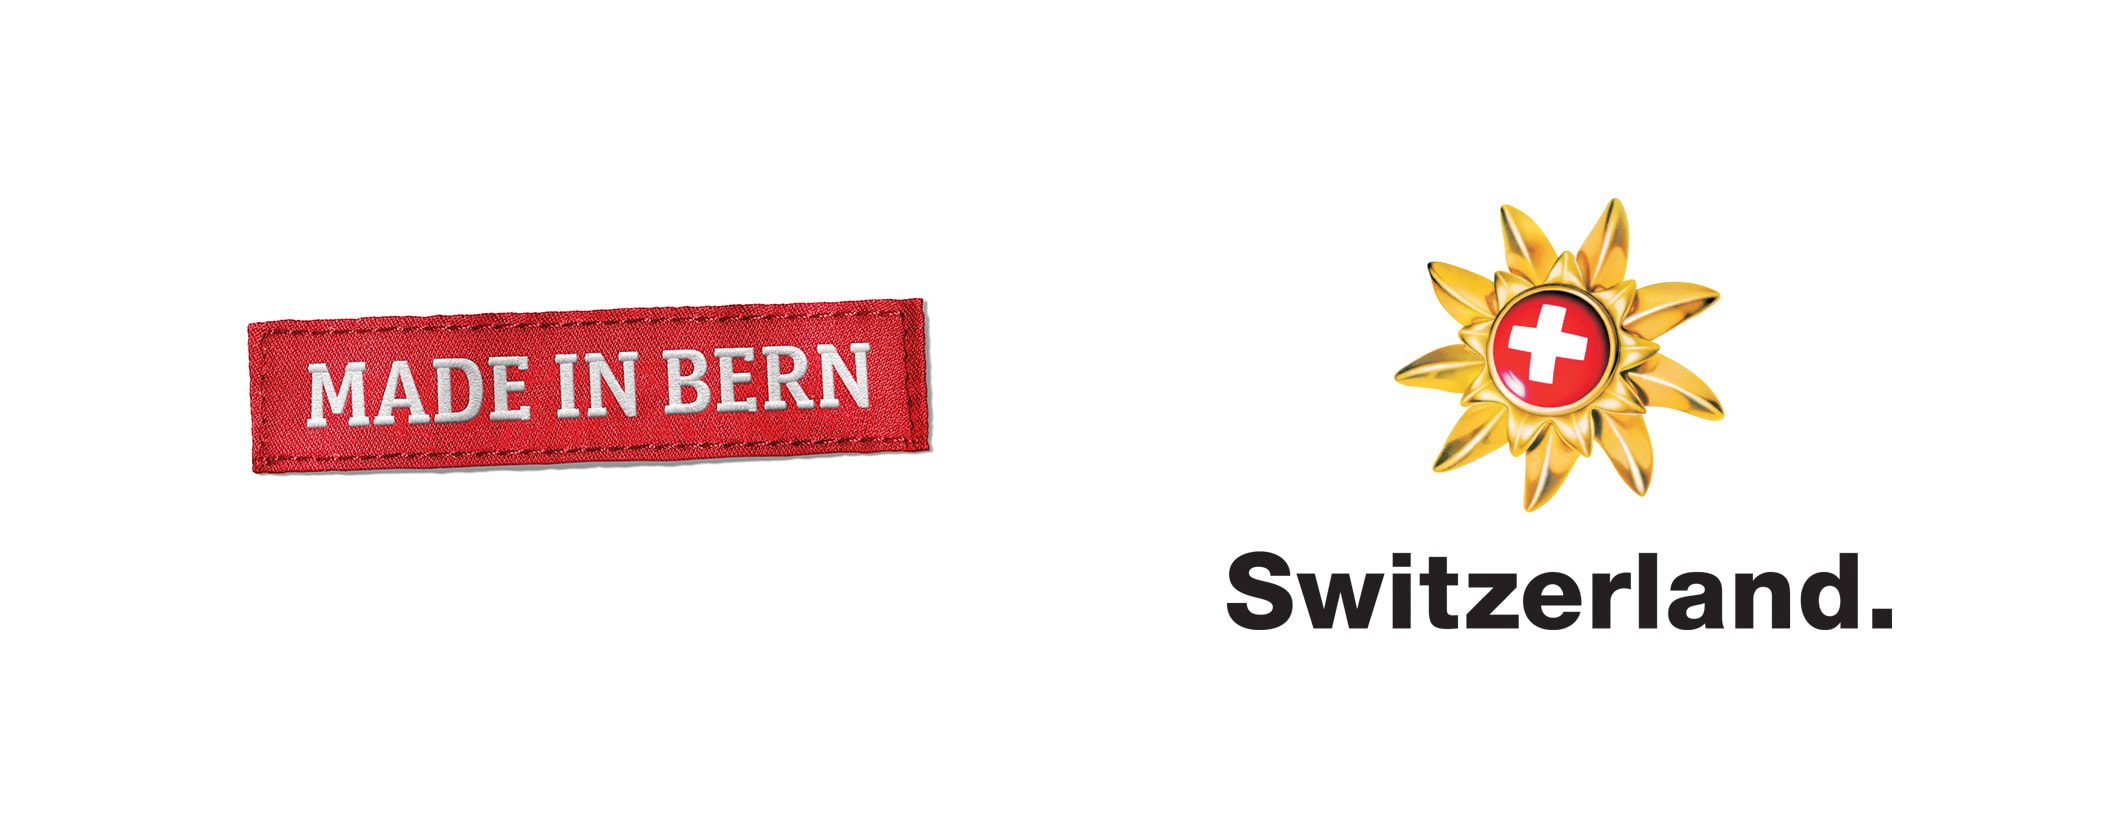 Made in Bern / Switzerland